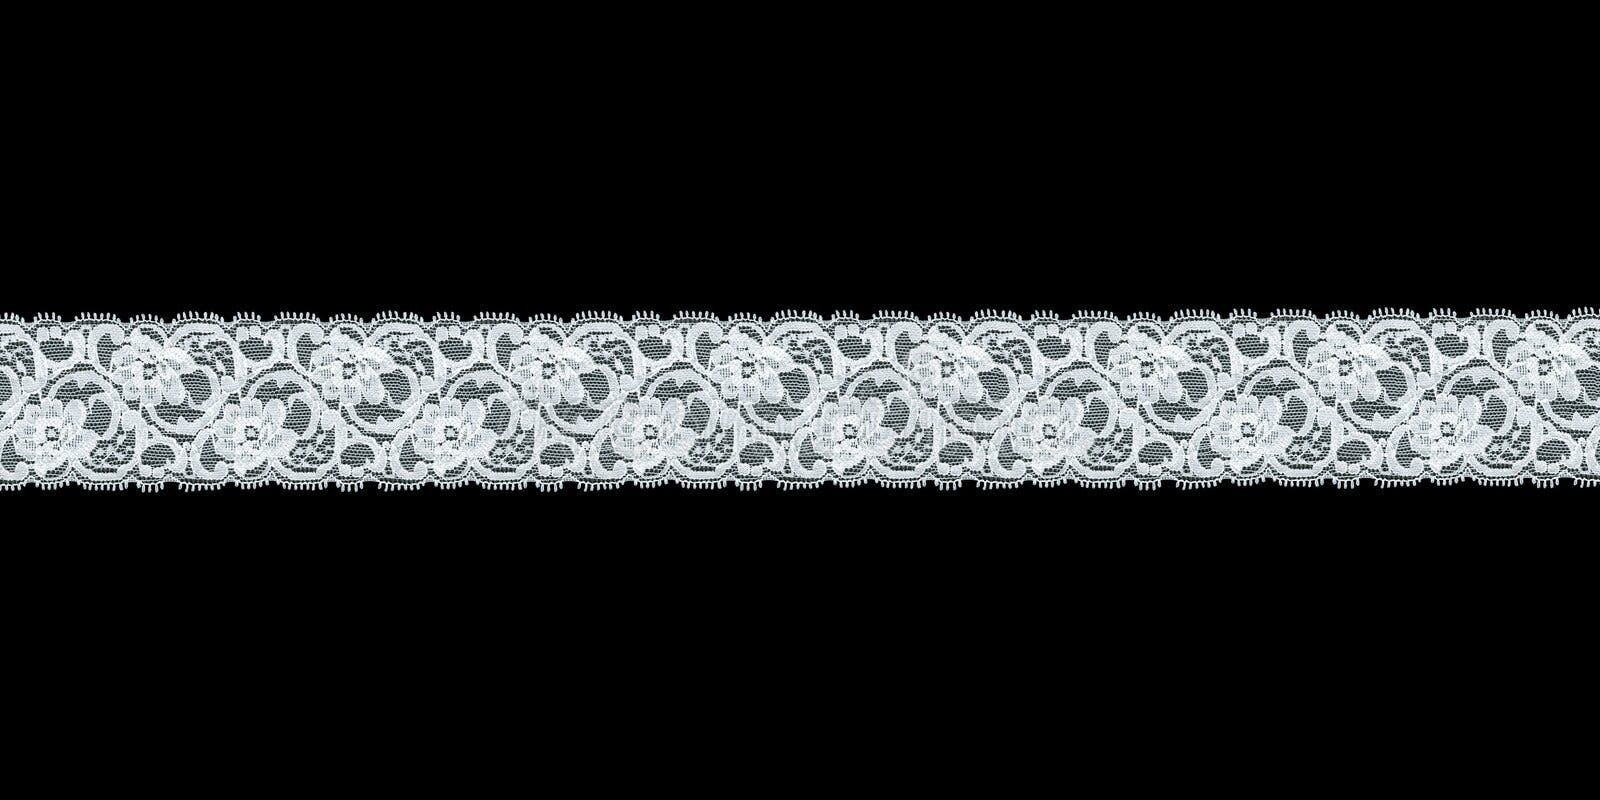 Black lace band stock photo. Image of dress, brugge, lace - 10976104